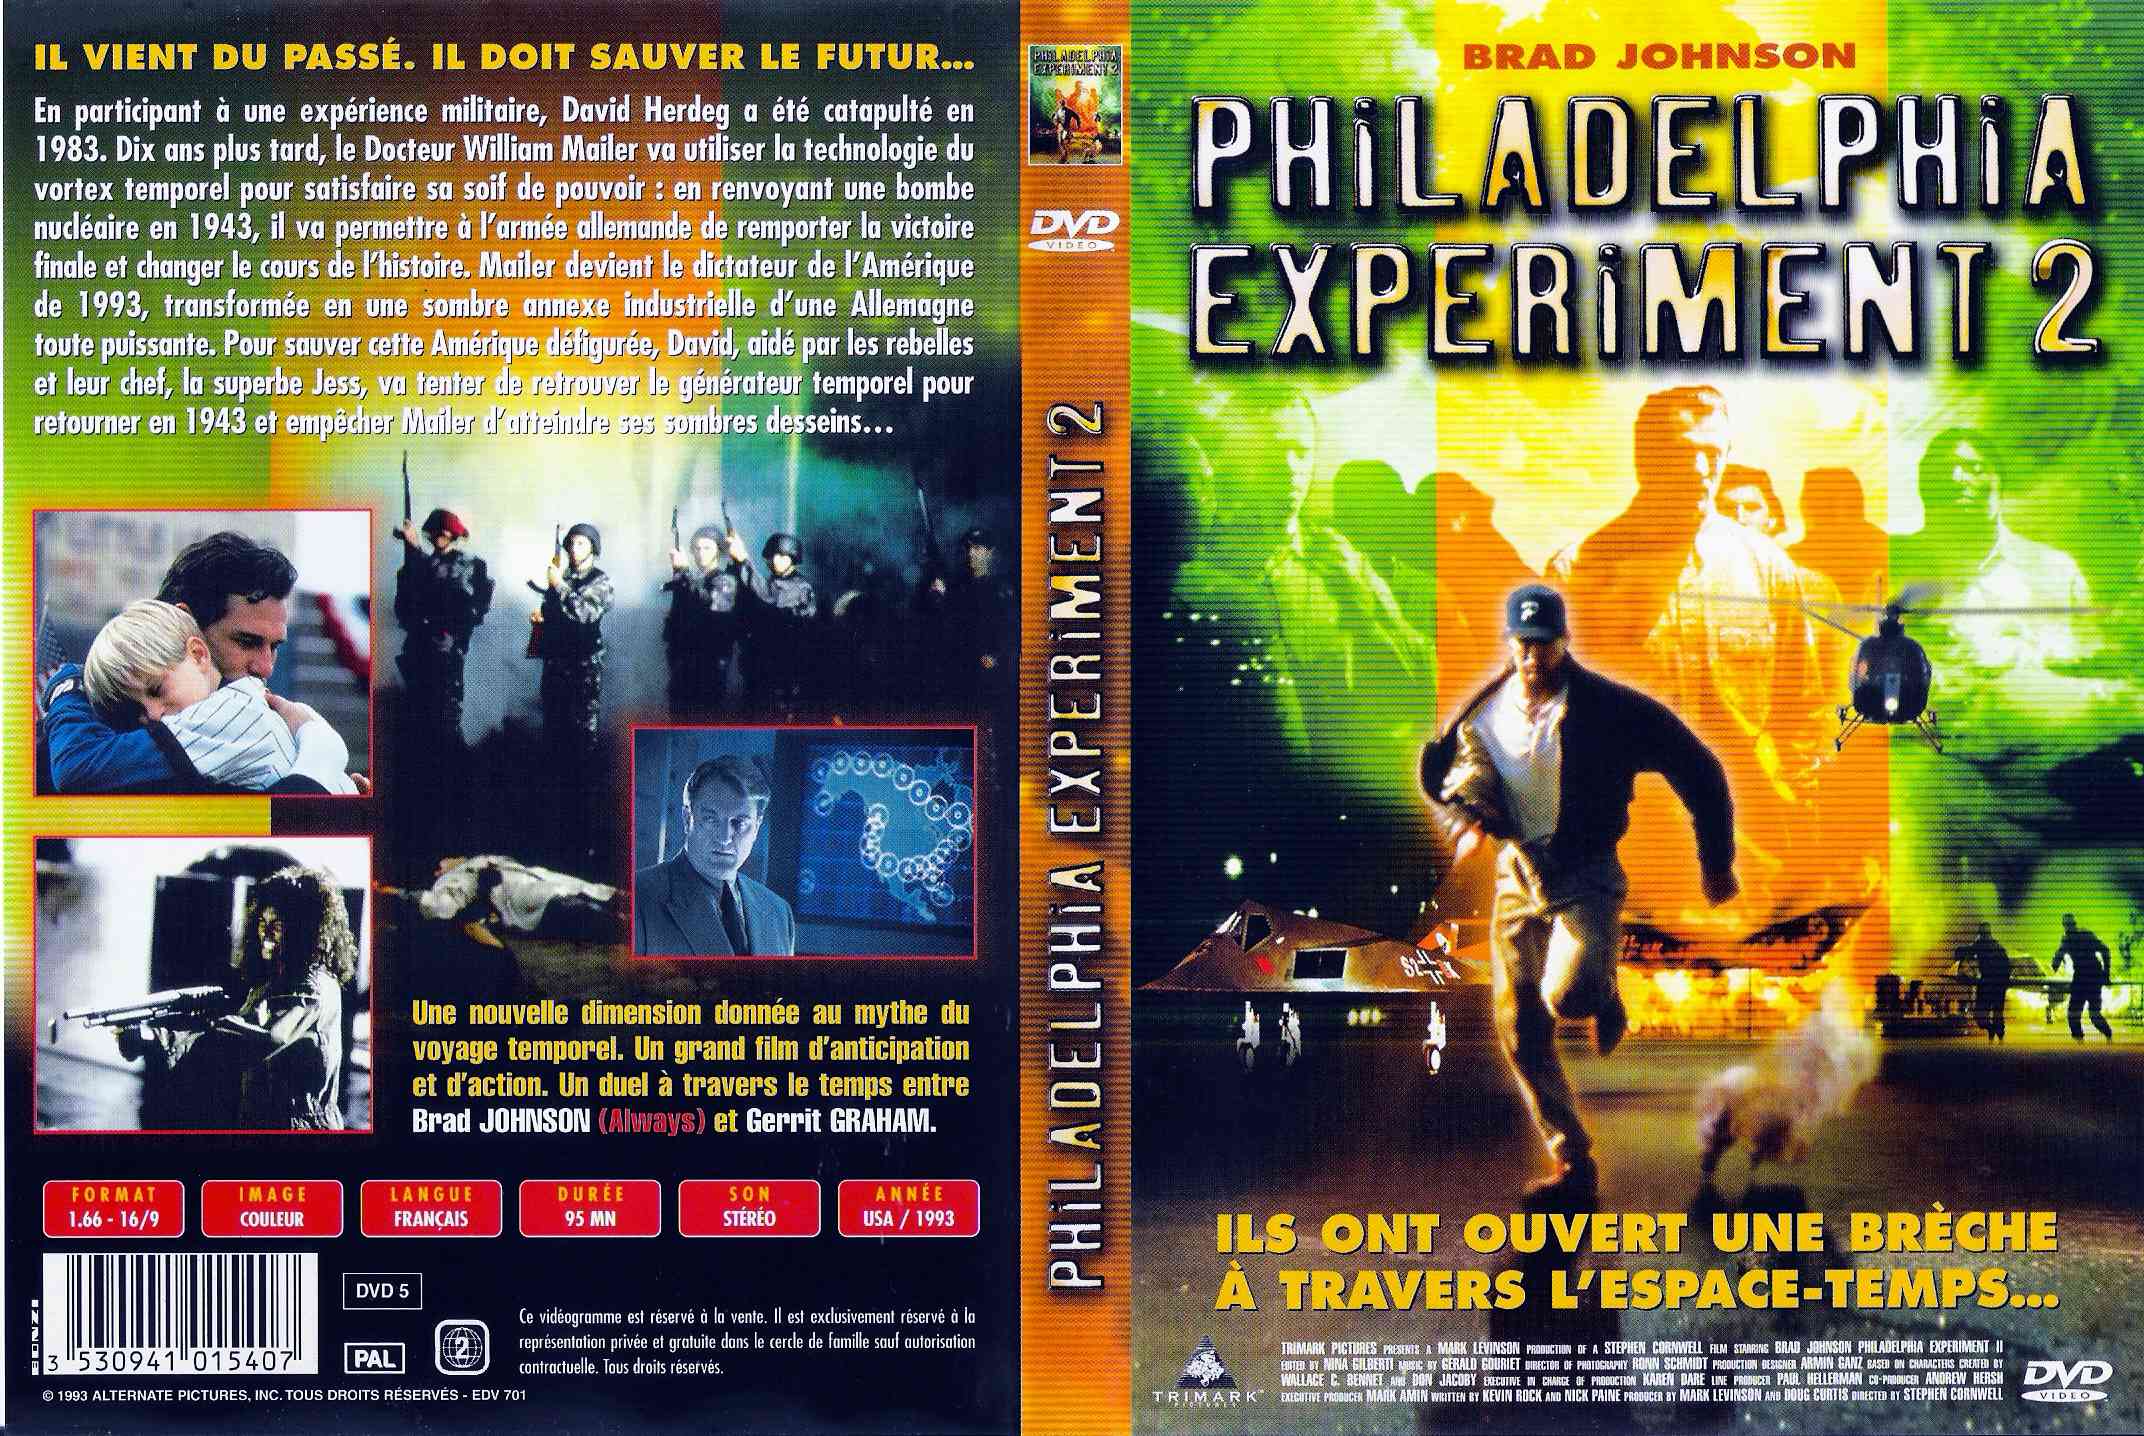 Jaquette DVD Philadelphia experiment 2